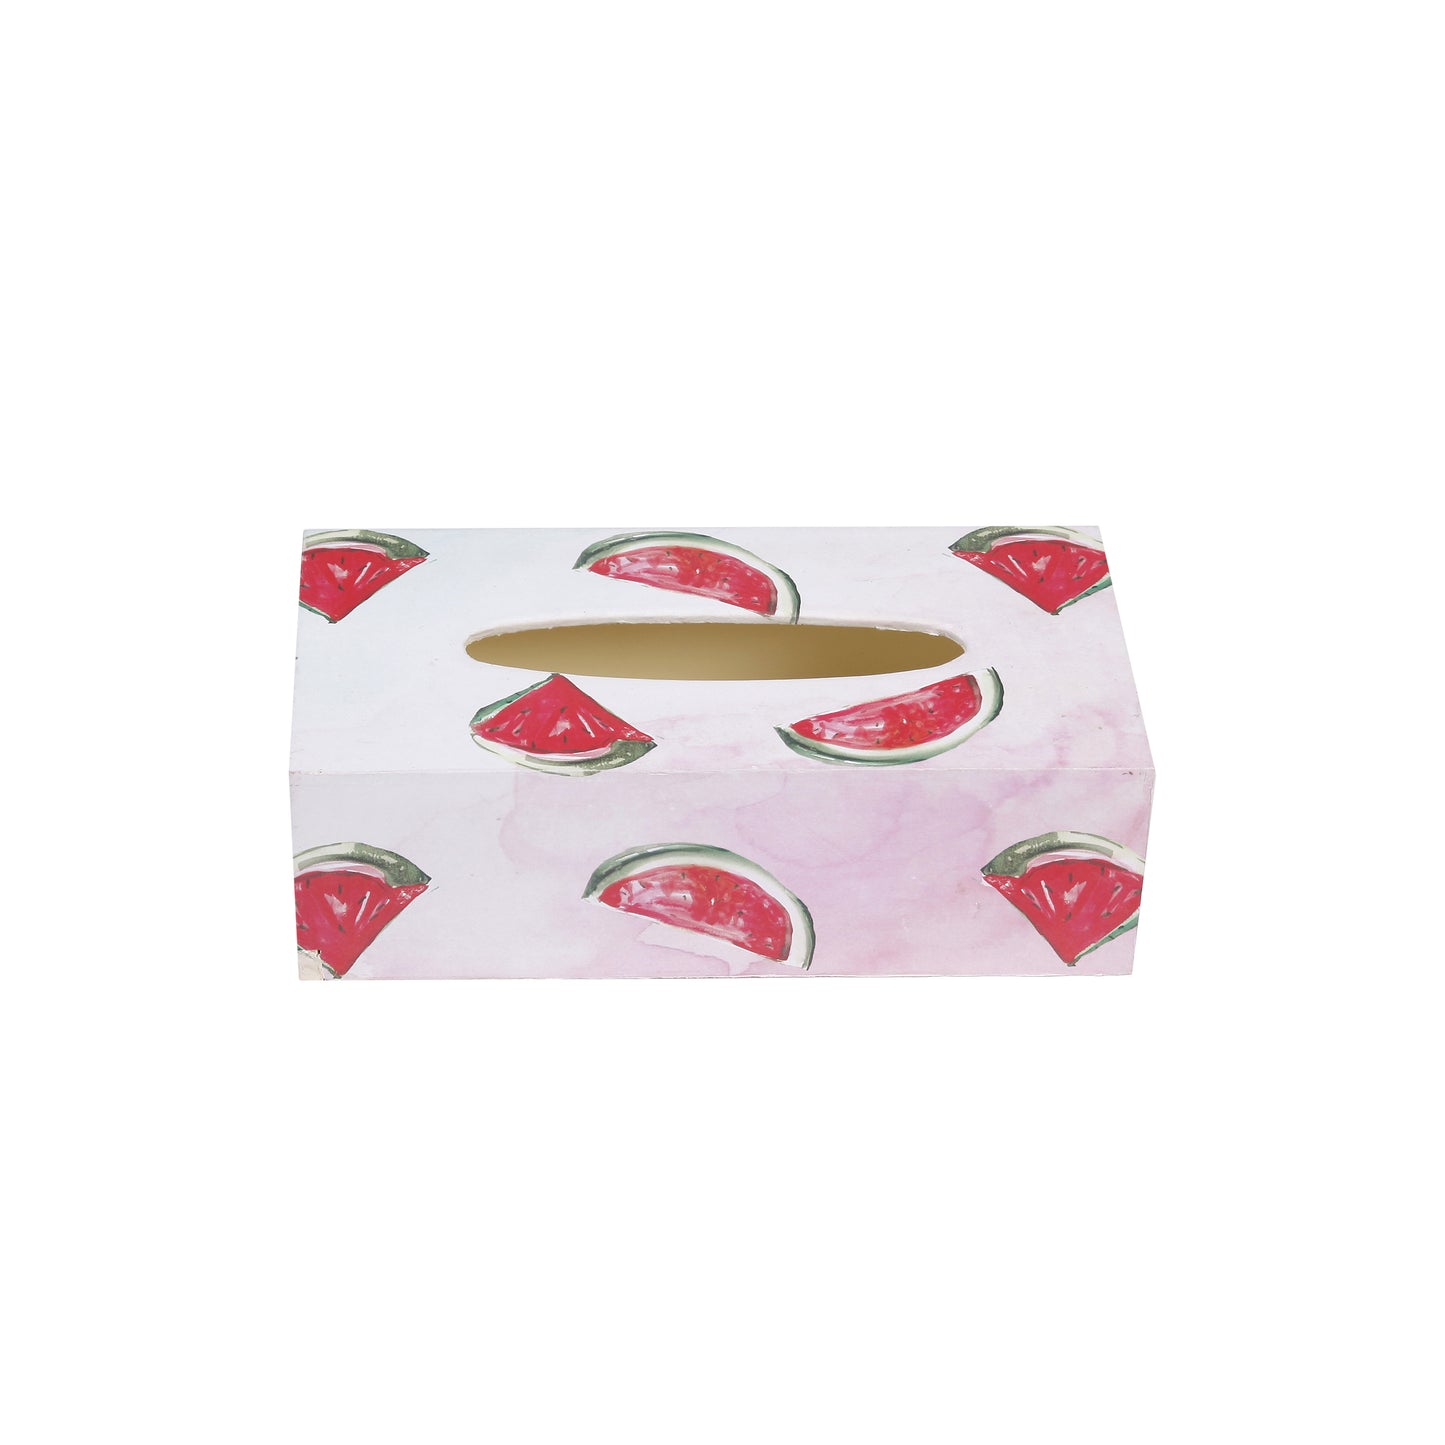 A Tiny Mistake Watermelon Rectangle Tissue Box, 26 x 13 x 8 cm